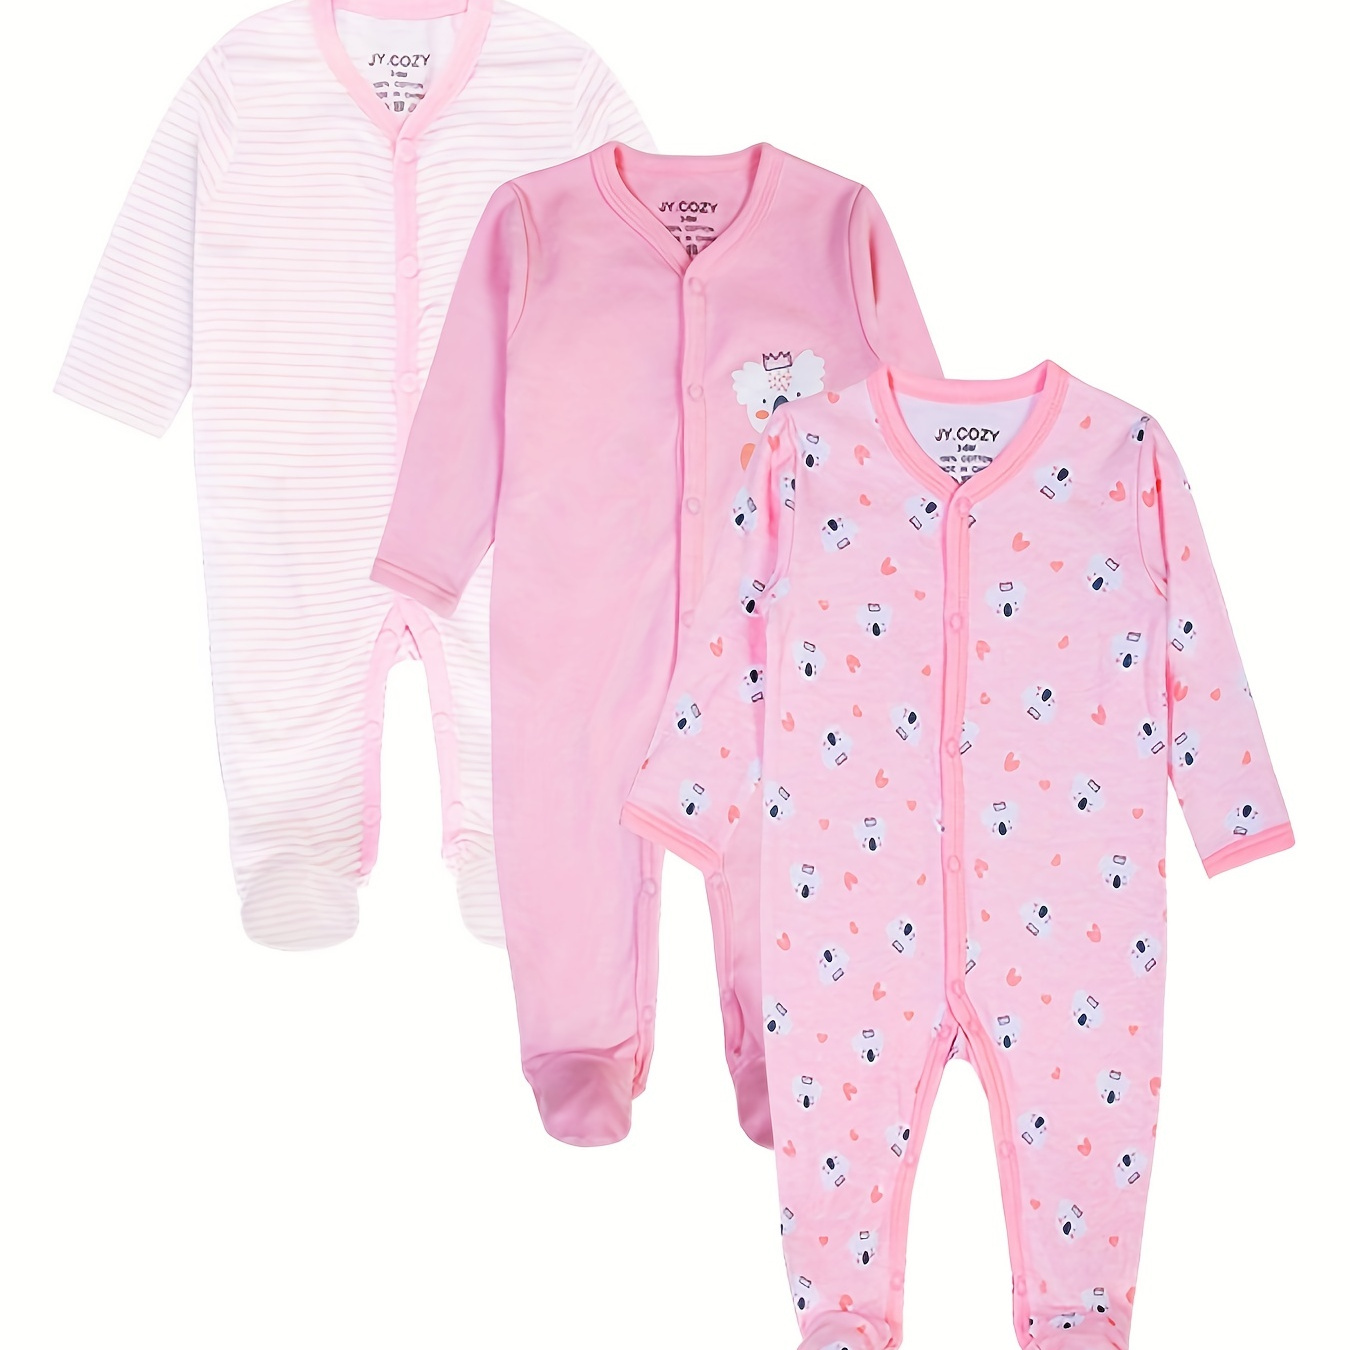 

Baby Girls Long Sleeve Cute & Comfy Cotton Romper 3pcs Set, Infant Newborn Onesies